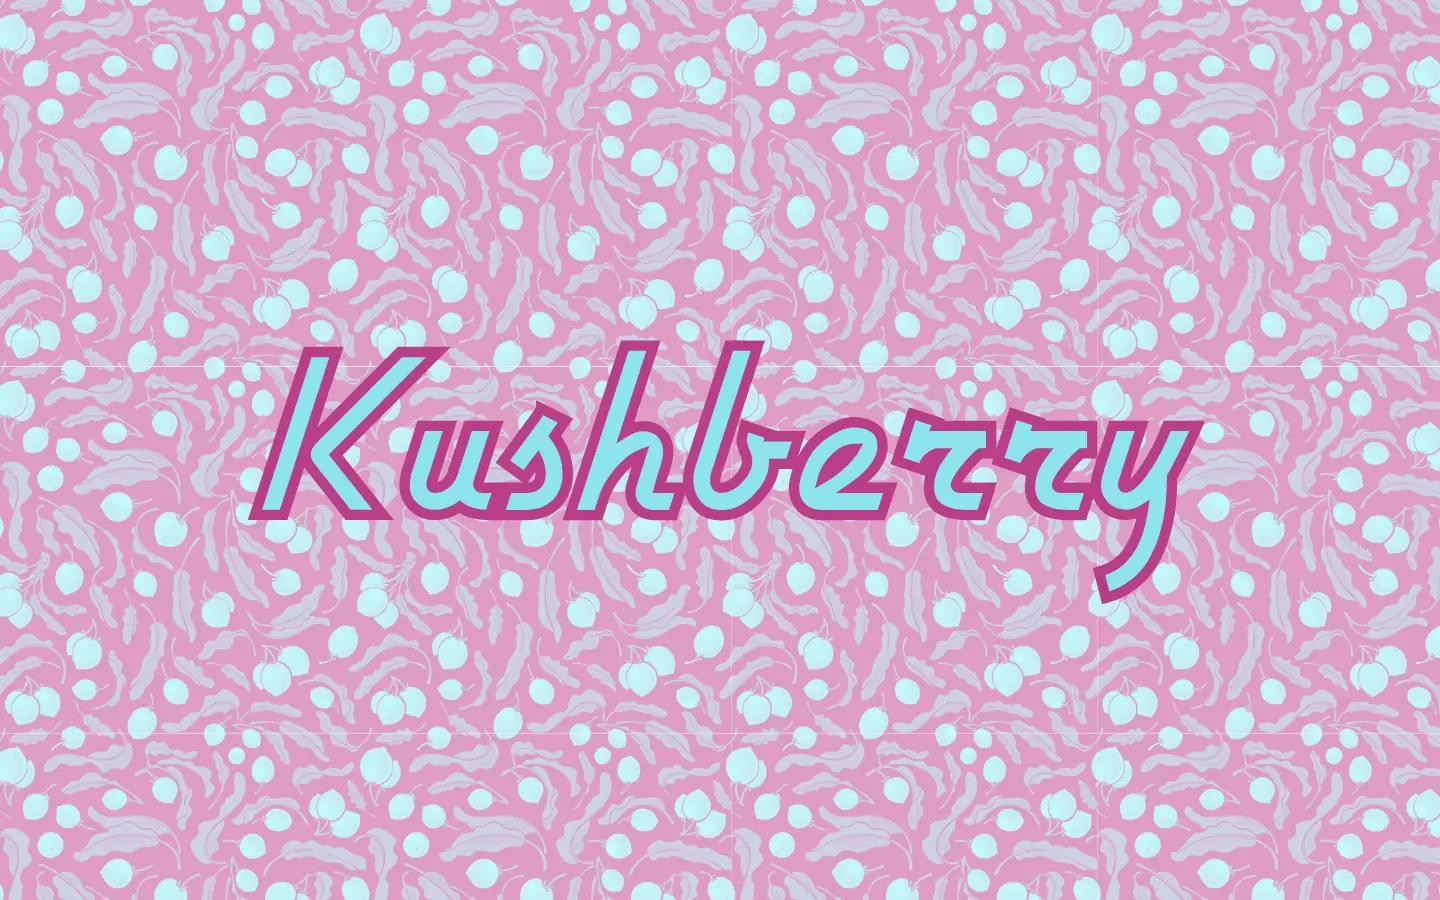 Kushberry Strain Information